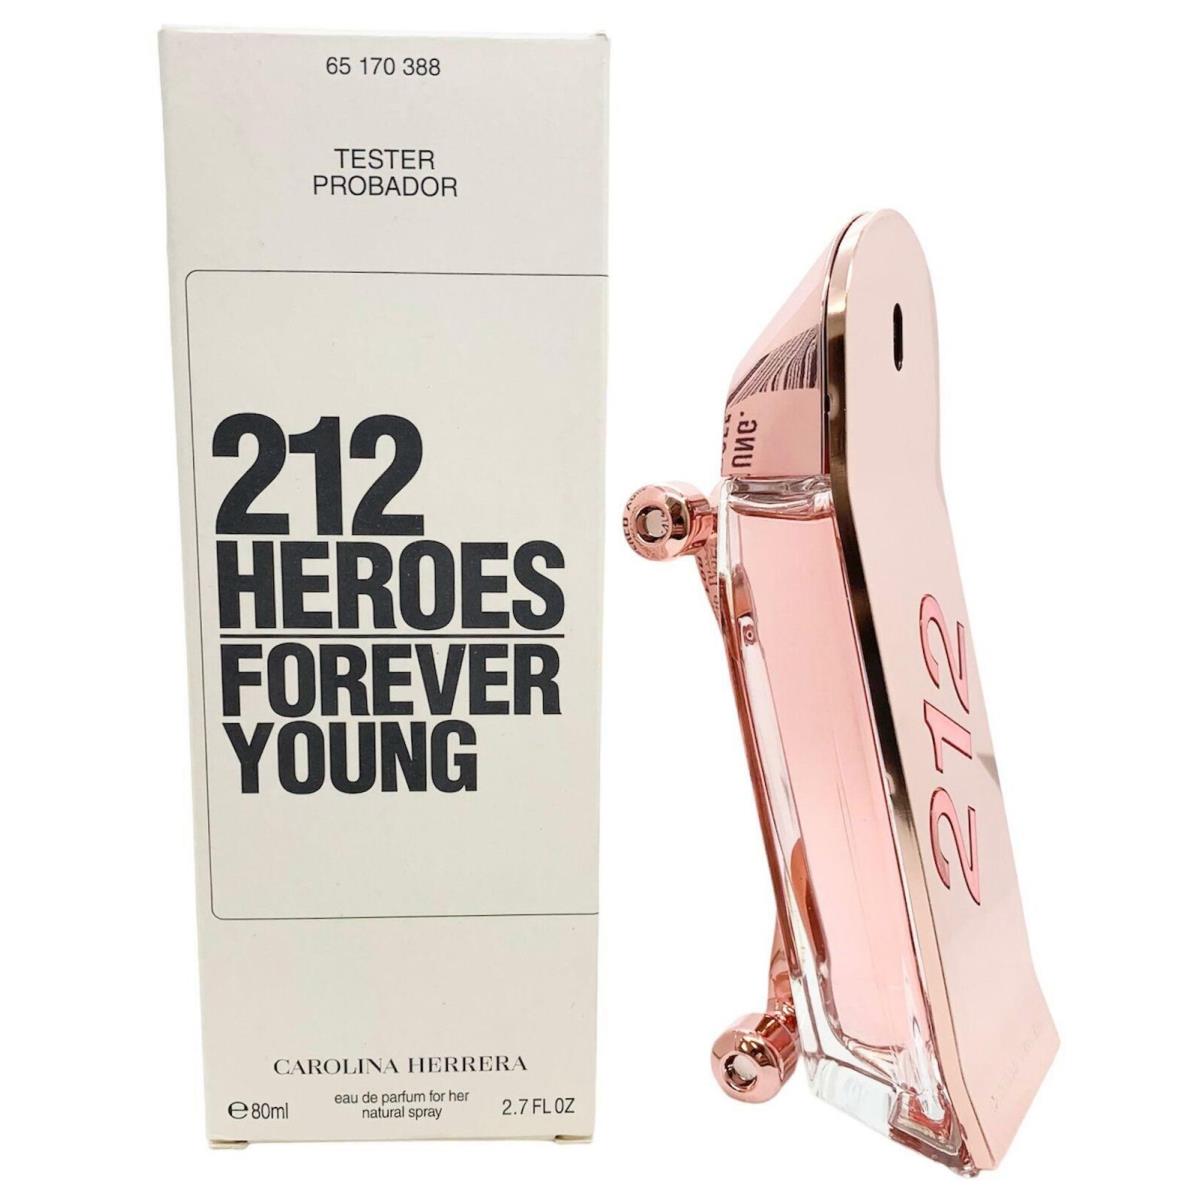 212 Heros Forever Young by Carolina Herrera Edp 2.7 oz Tester Box